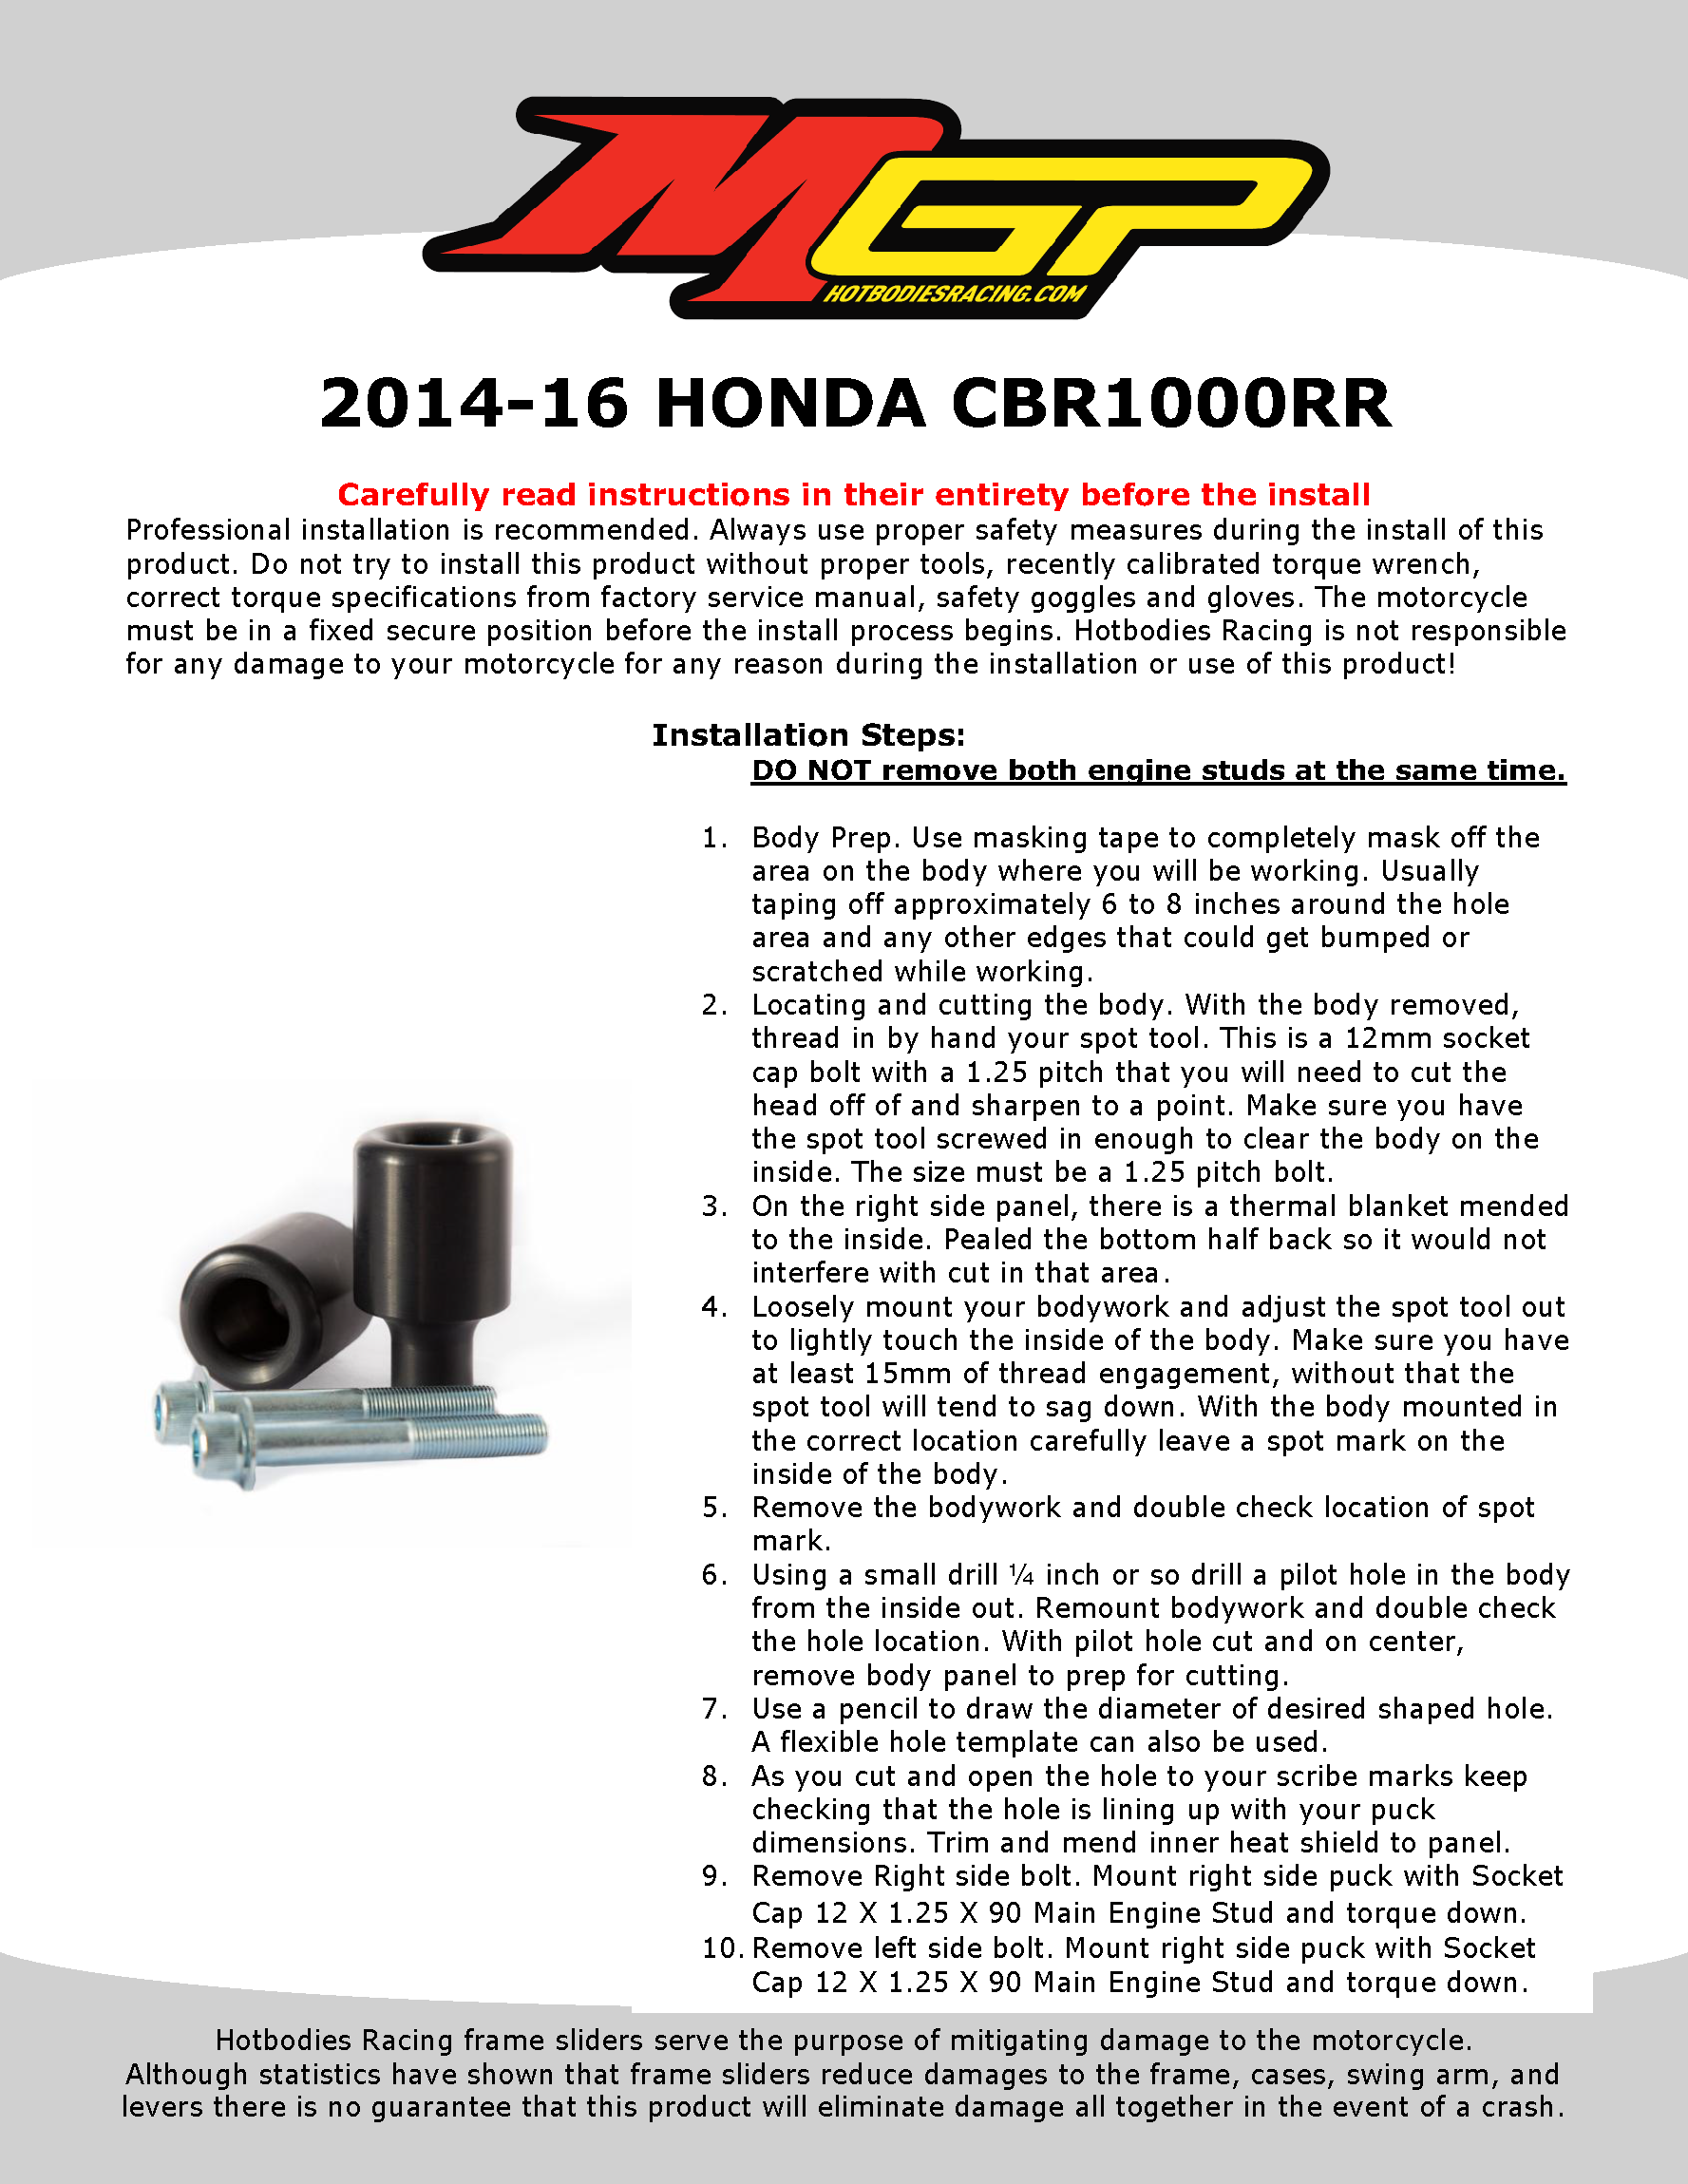 

2014-16 HONDA CBR1000RR Frame Sliders Installation

